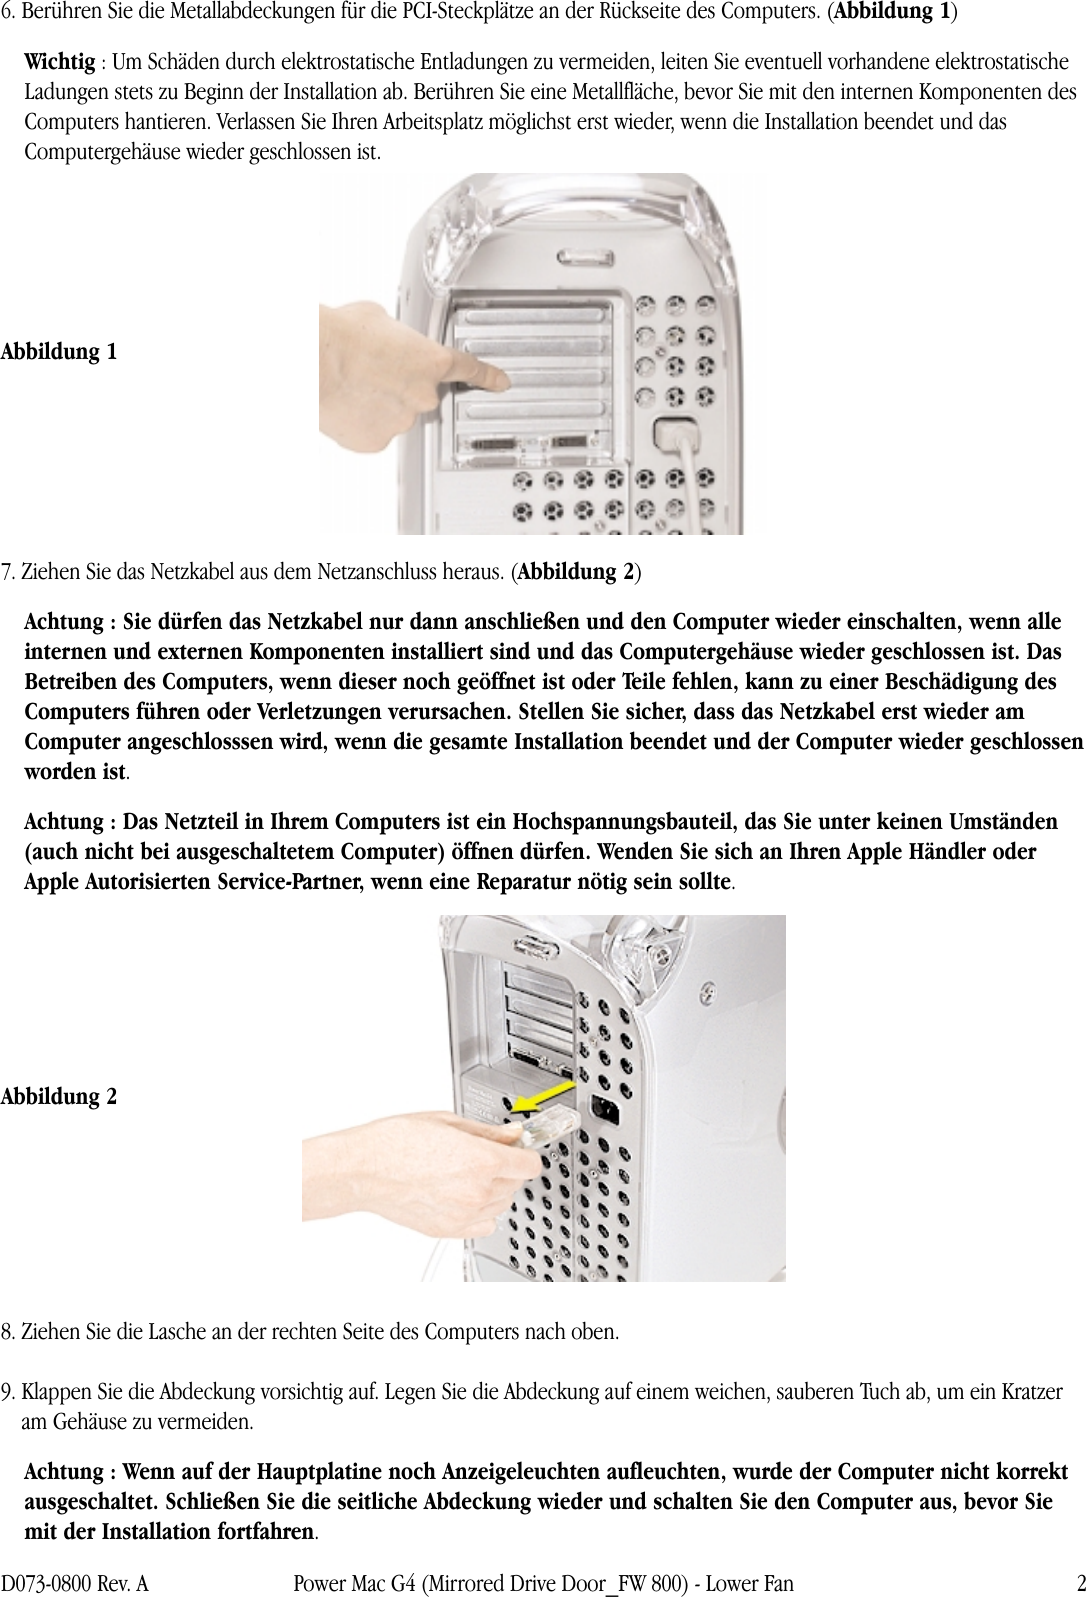 Page 2 of 10 - Apple Power Mac G4 (Mirrored Drive Doors) Lower Fan User Manual Doors, Fire Wire 800) - Unterer Ventilator Anw Anweisungen Zum Aus- Und Einbau G4mdd-fw800-lowerfan